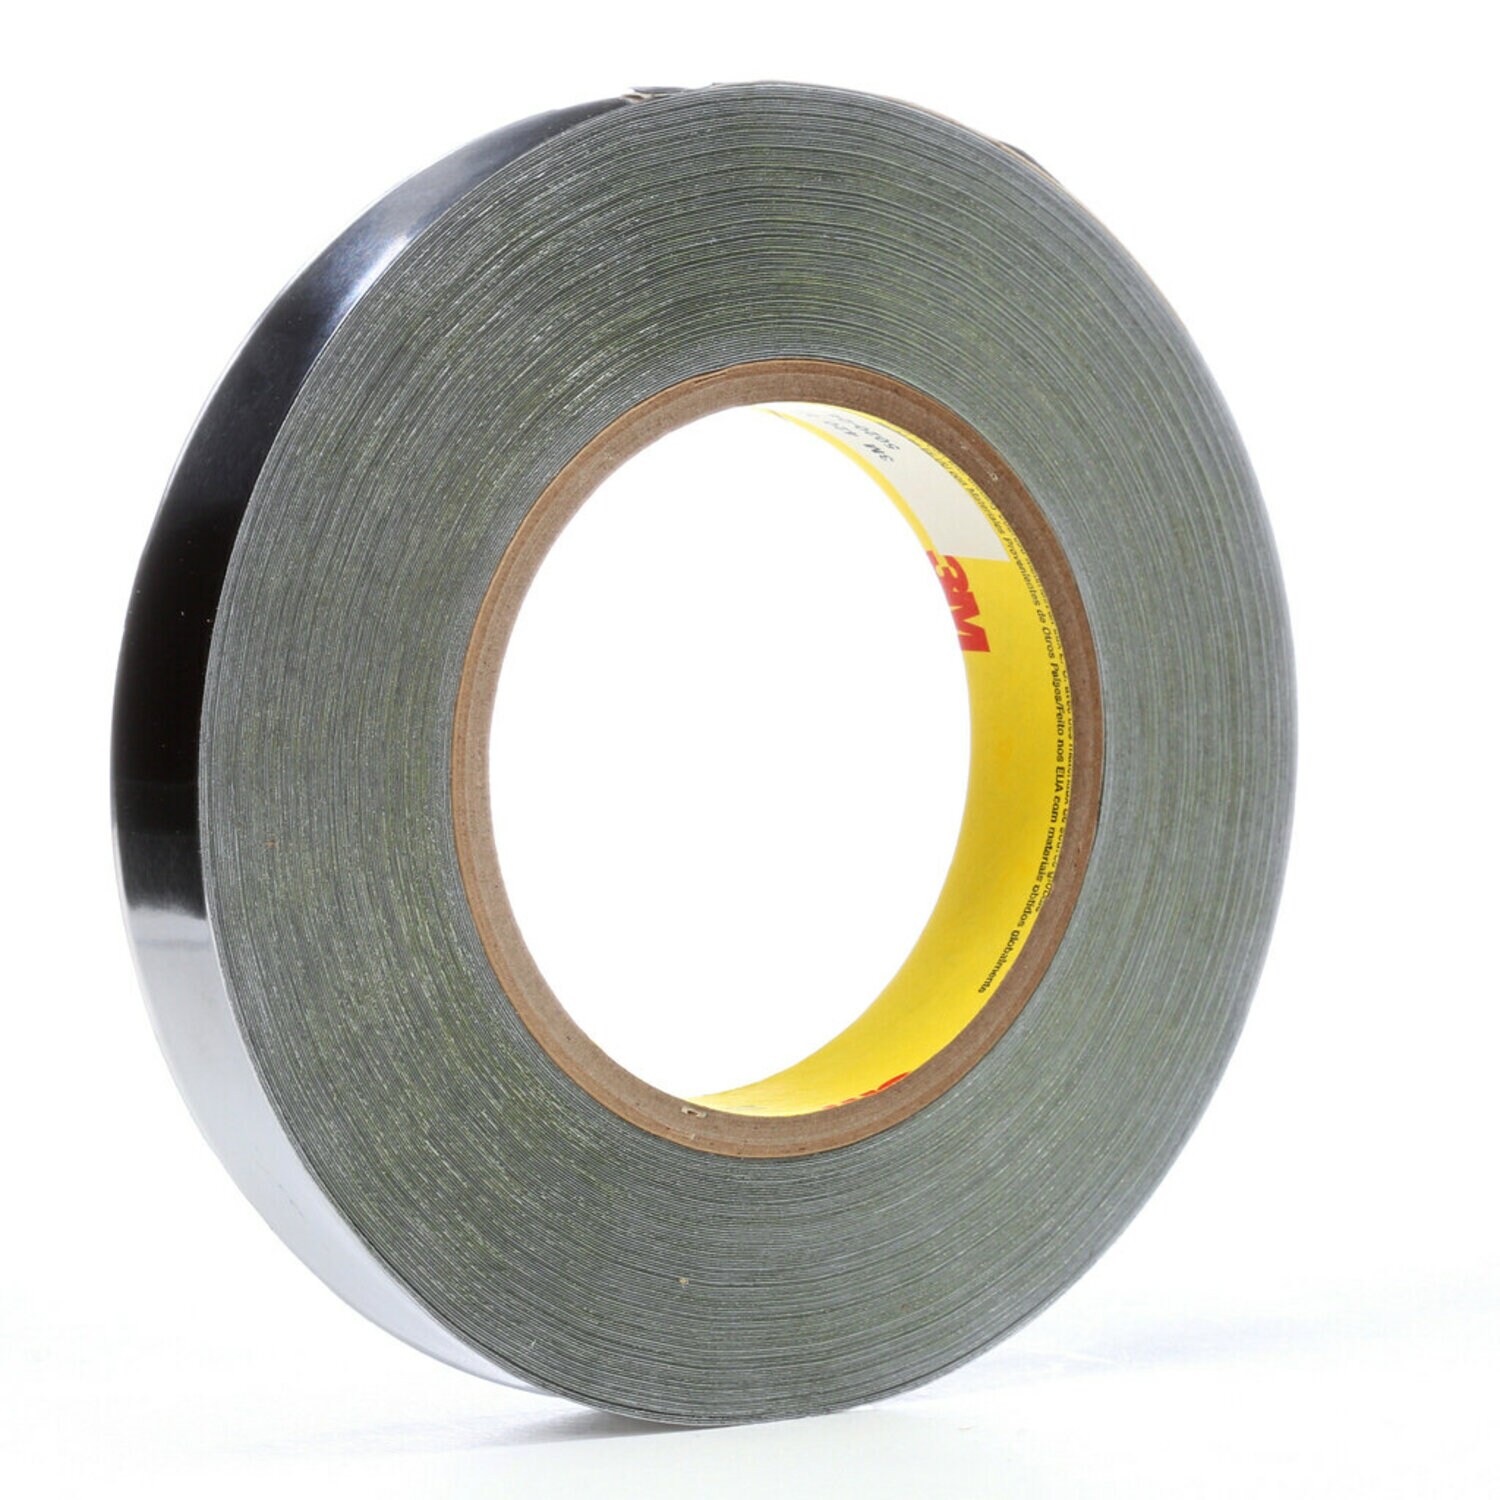 7000001314 - 3M Lead Foil Tape 420, Dark Silver, 1 in x 36 yd, 6.8 mil, 9 rolls per
case